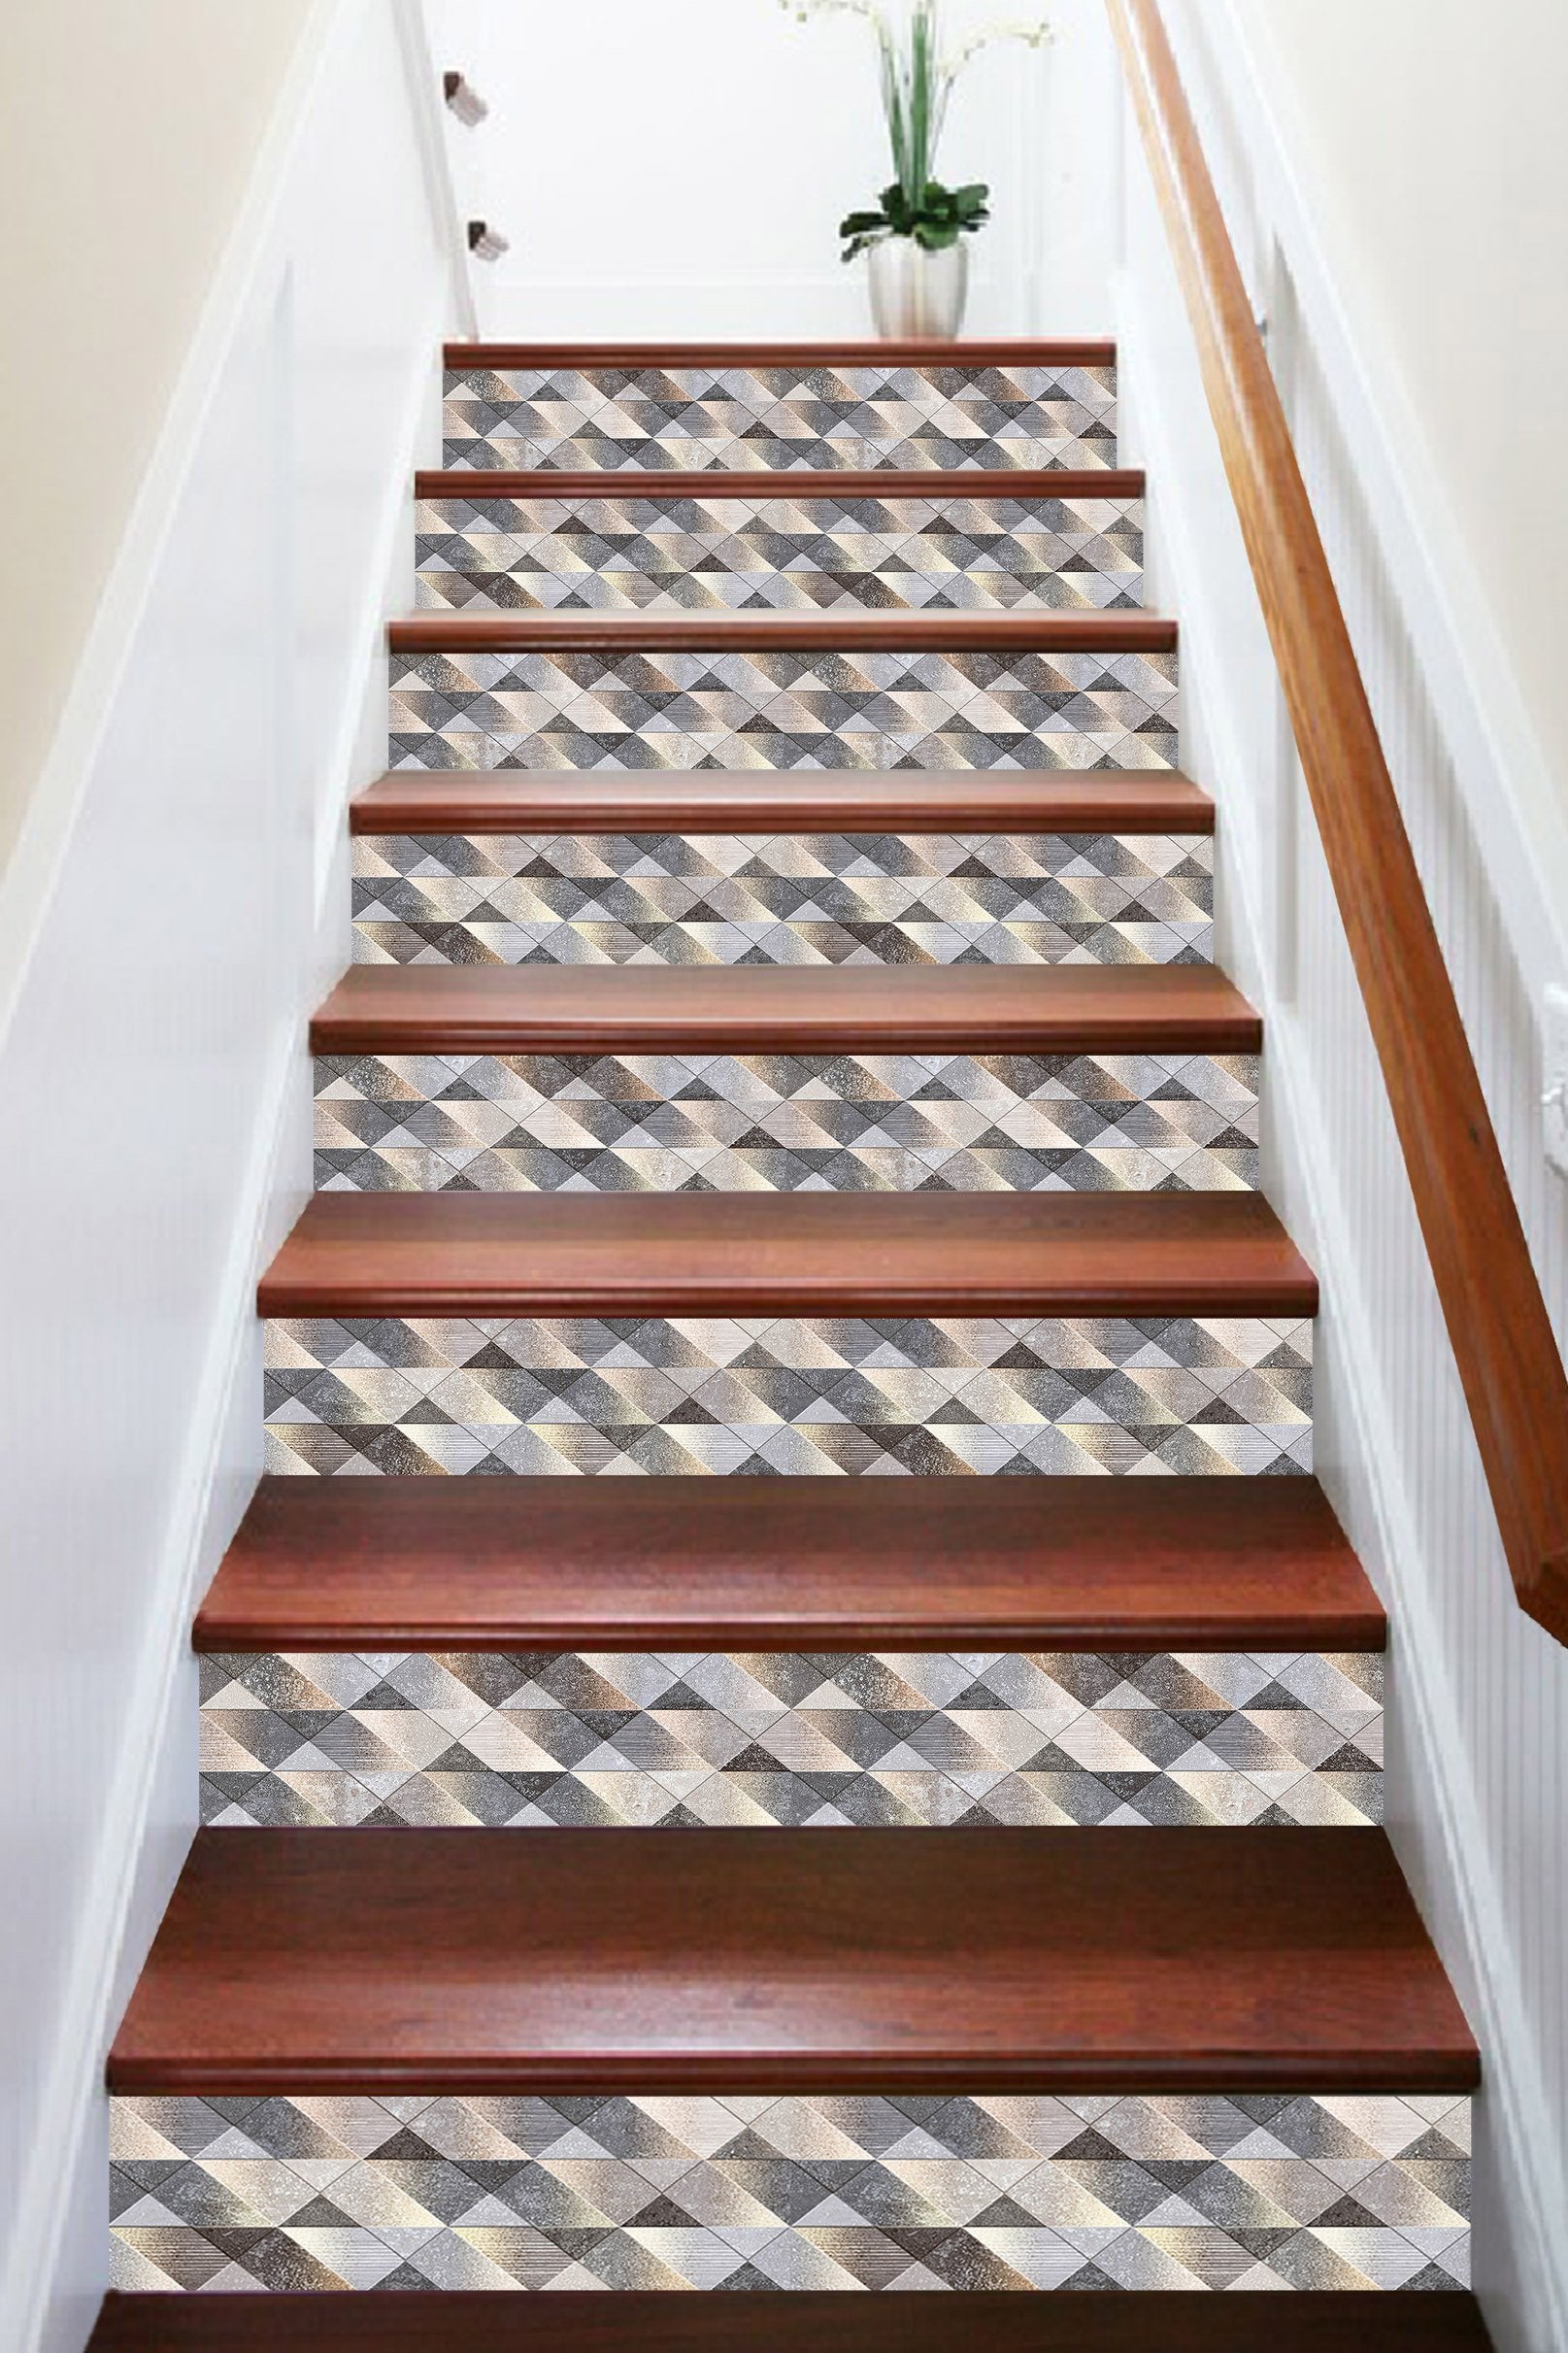 3D Shiny Mosaic 0006 Marble Tile Texture Stair Risers Wallpaper AJ Wallpaper 